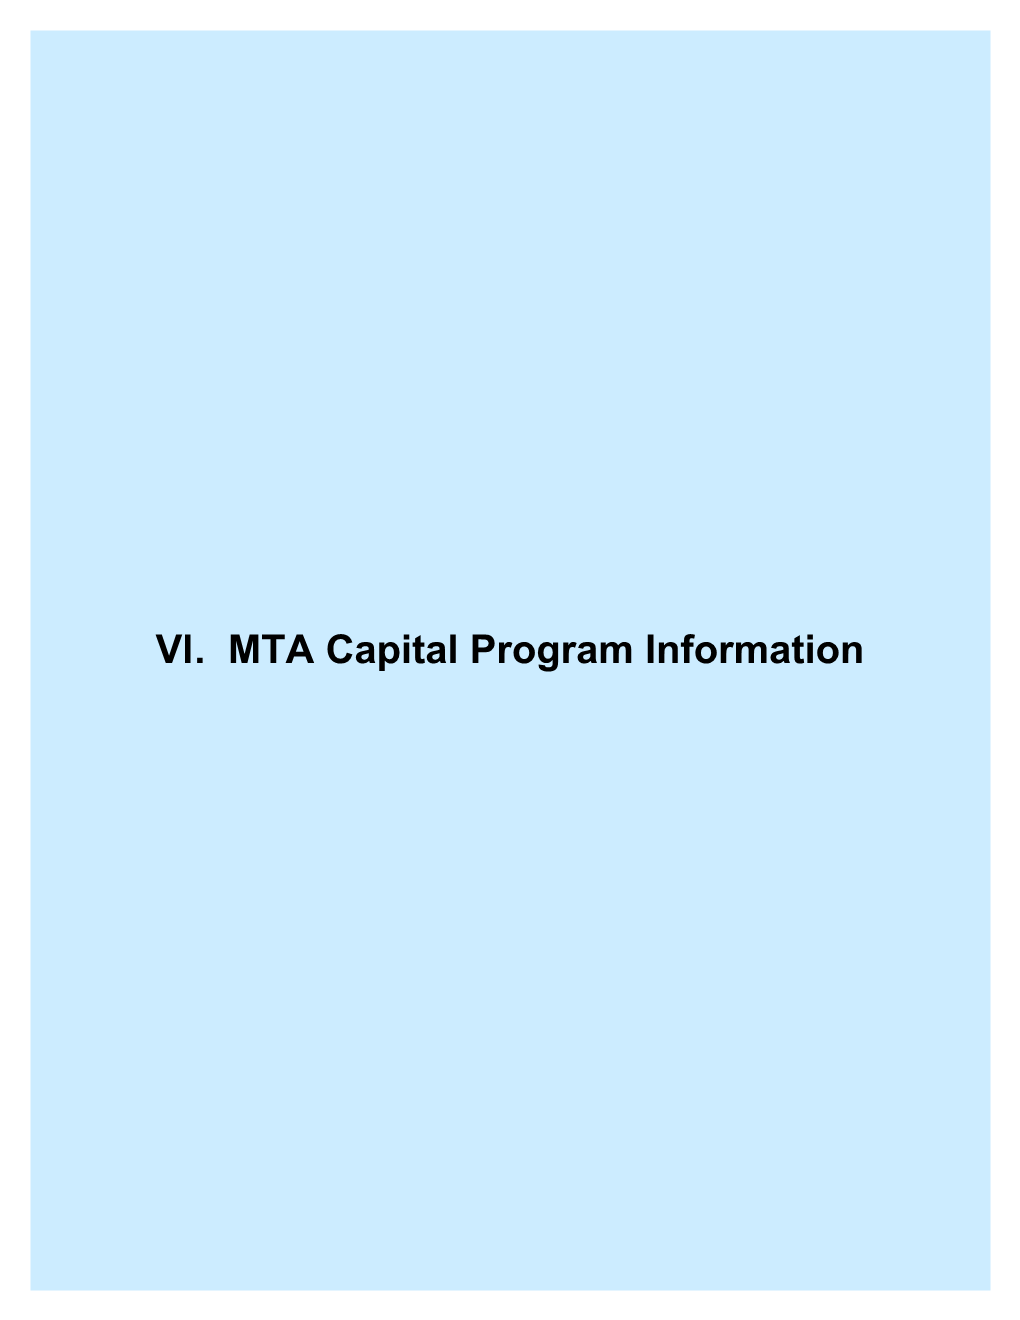 MTA 2006 Final Proposed Budget and November Financial Plan 2006-2009